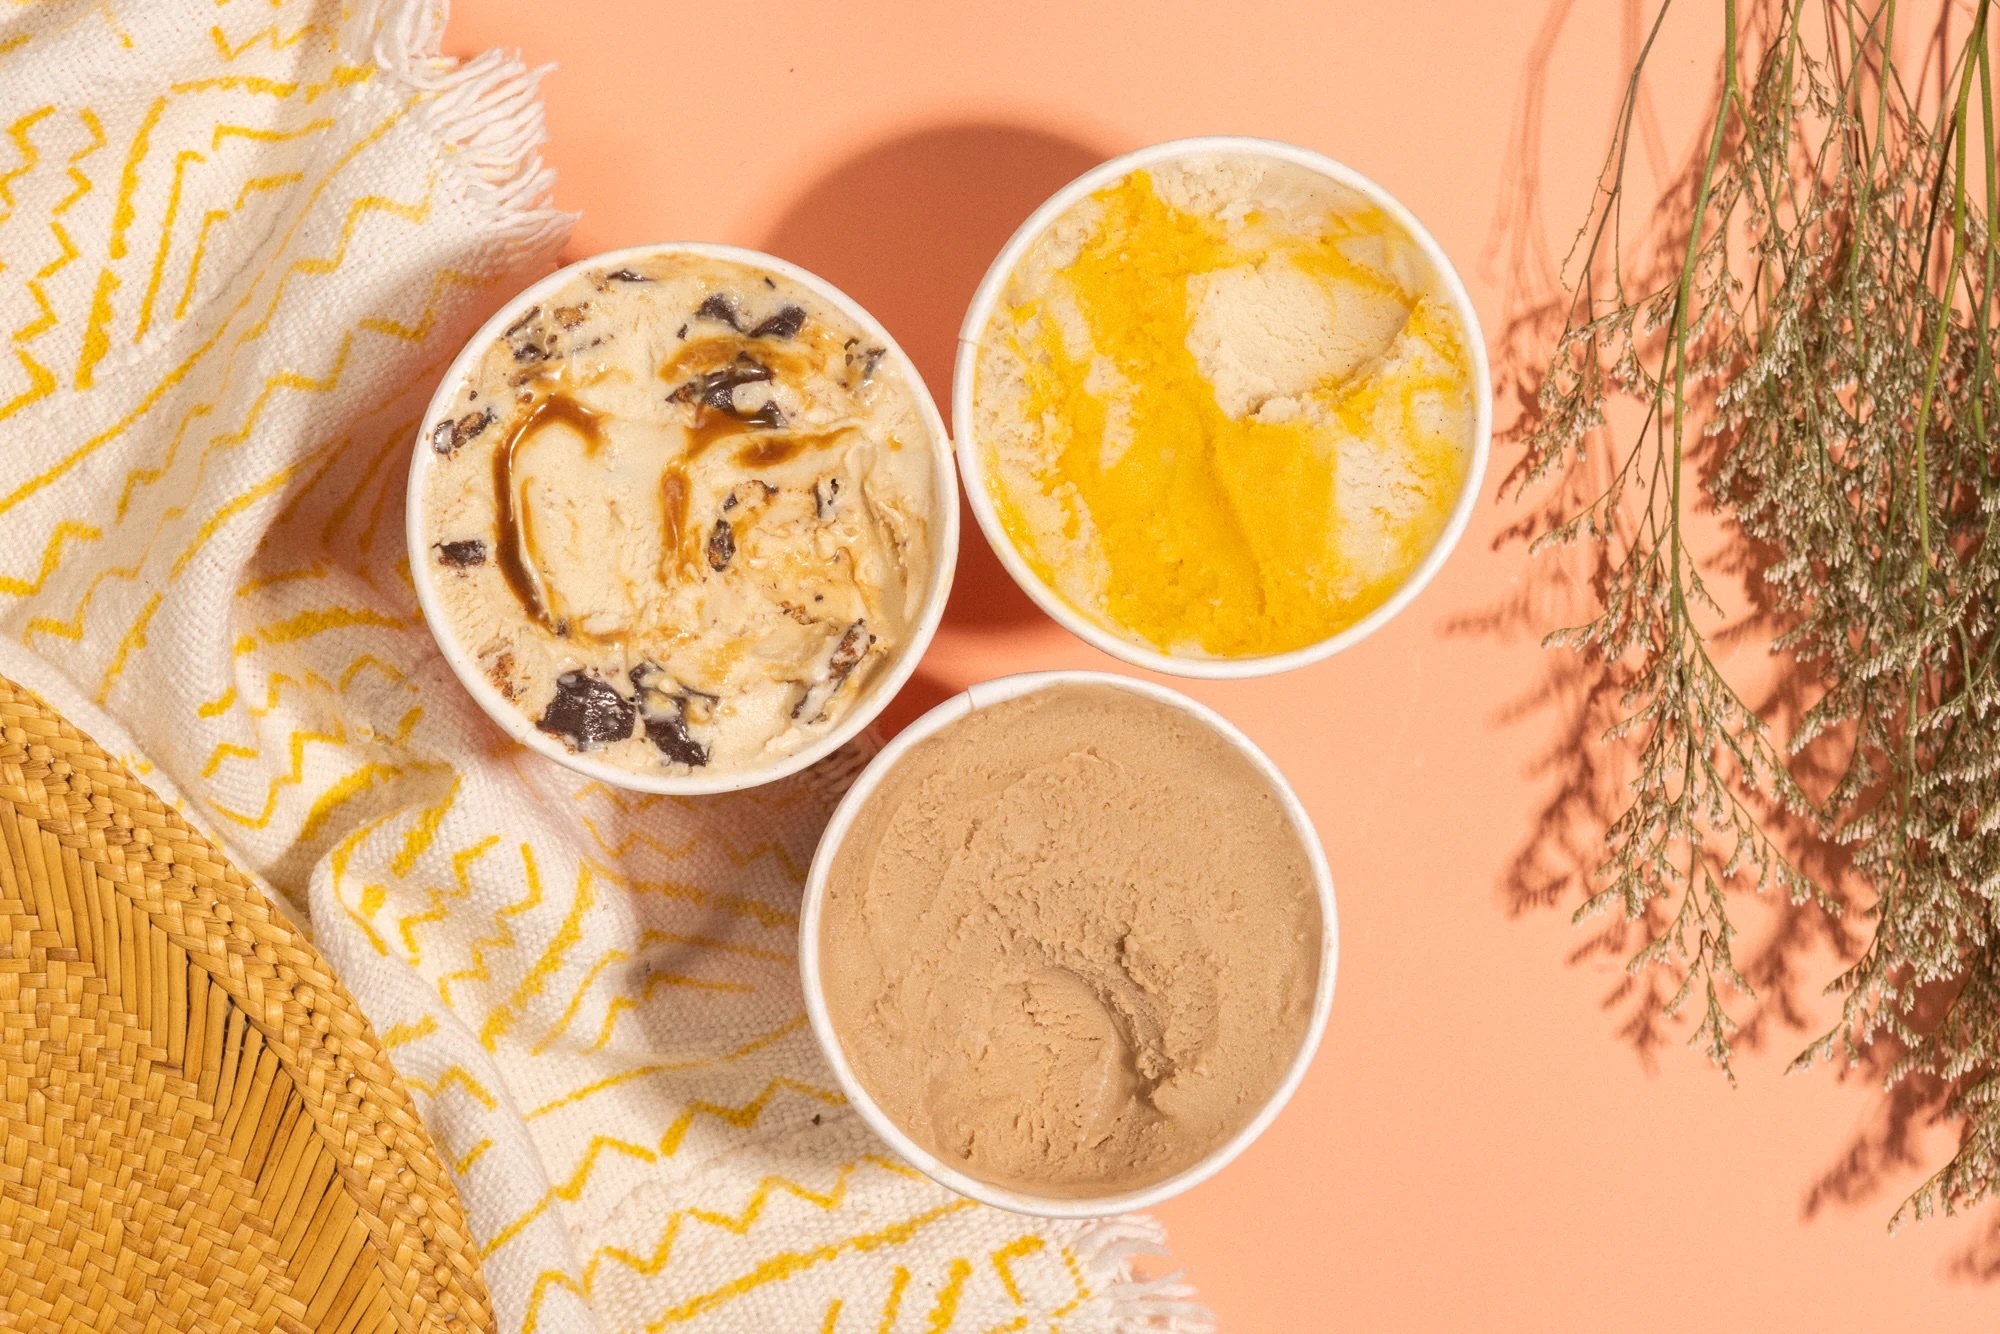 Plant-based ice cream from Frankie and Jo’s: Vanilla Caramel Cone, Blue Star Coffee, and Mango Sorbet Swirl!
